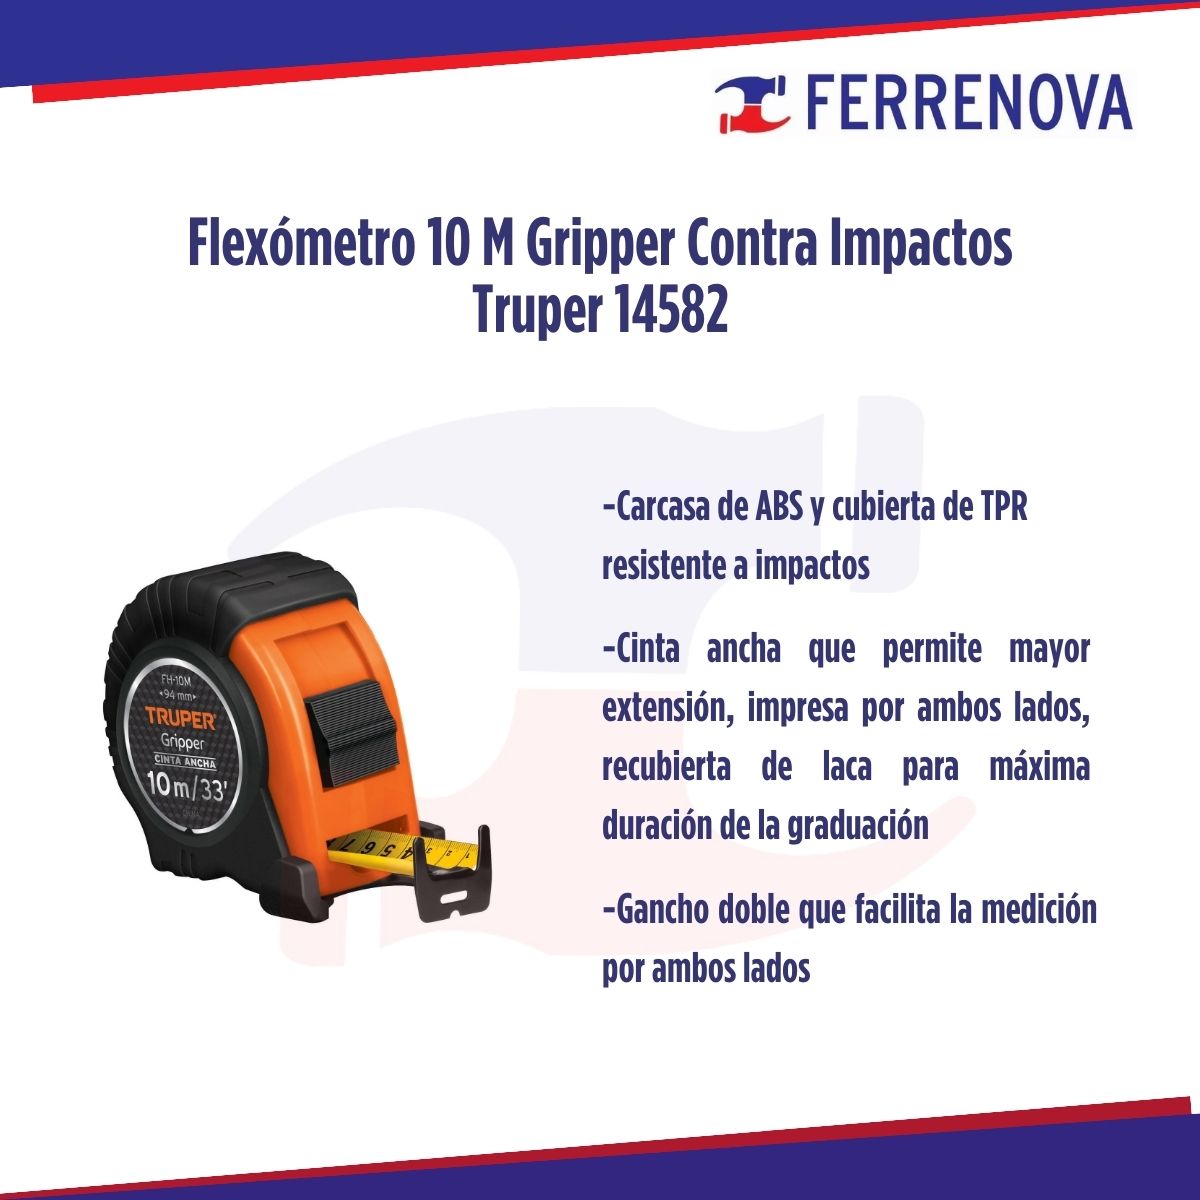 Flexómetro 10 M Gripper Contra Impactos Truper 14582